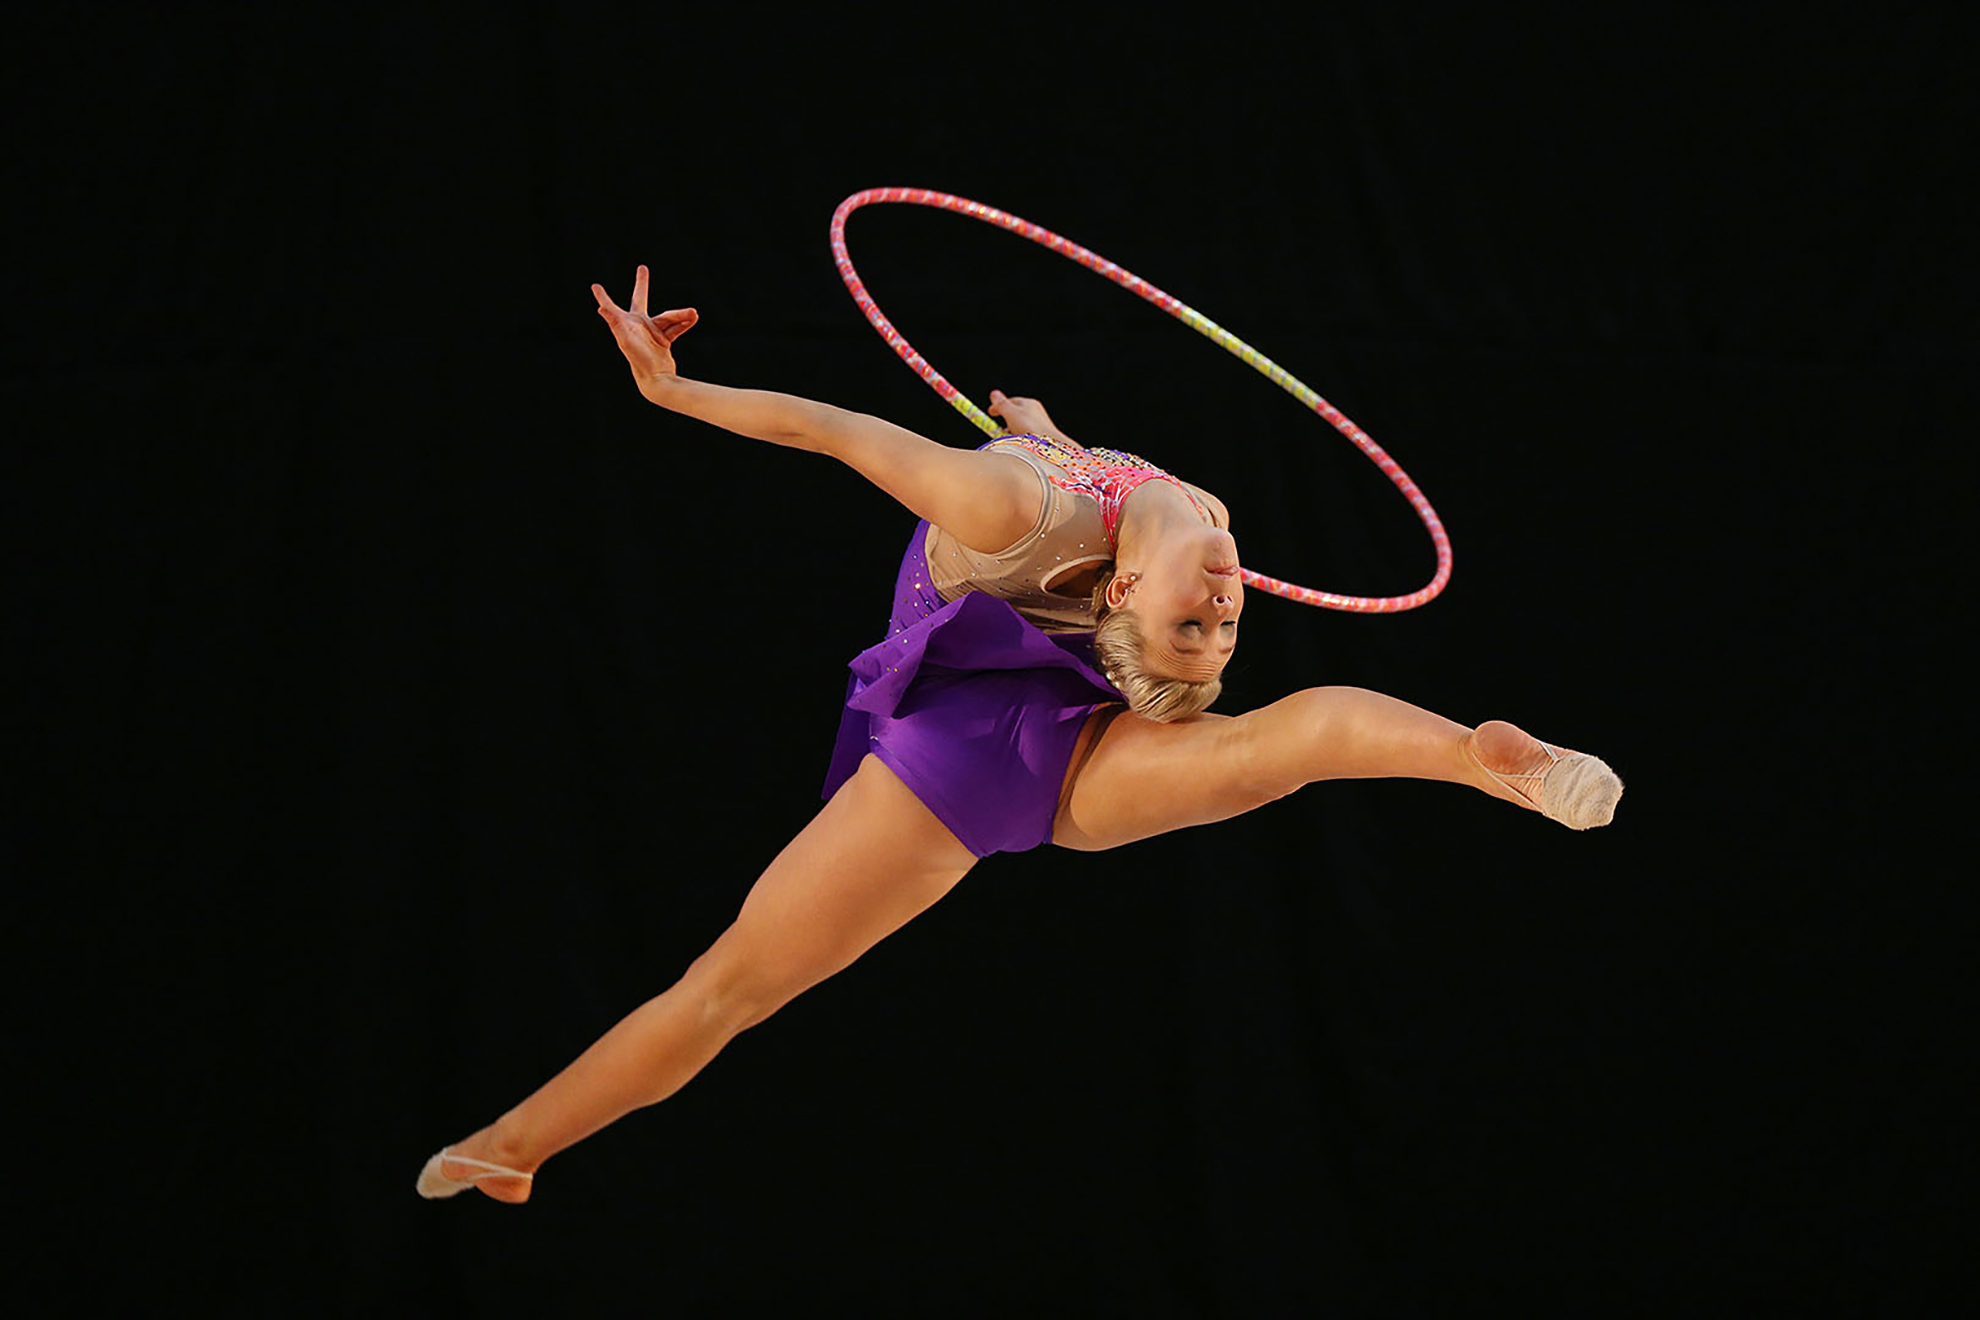 Ballet dancer in action